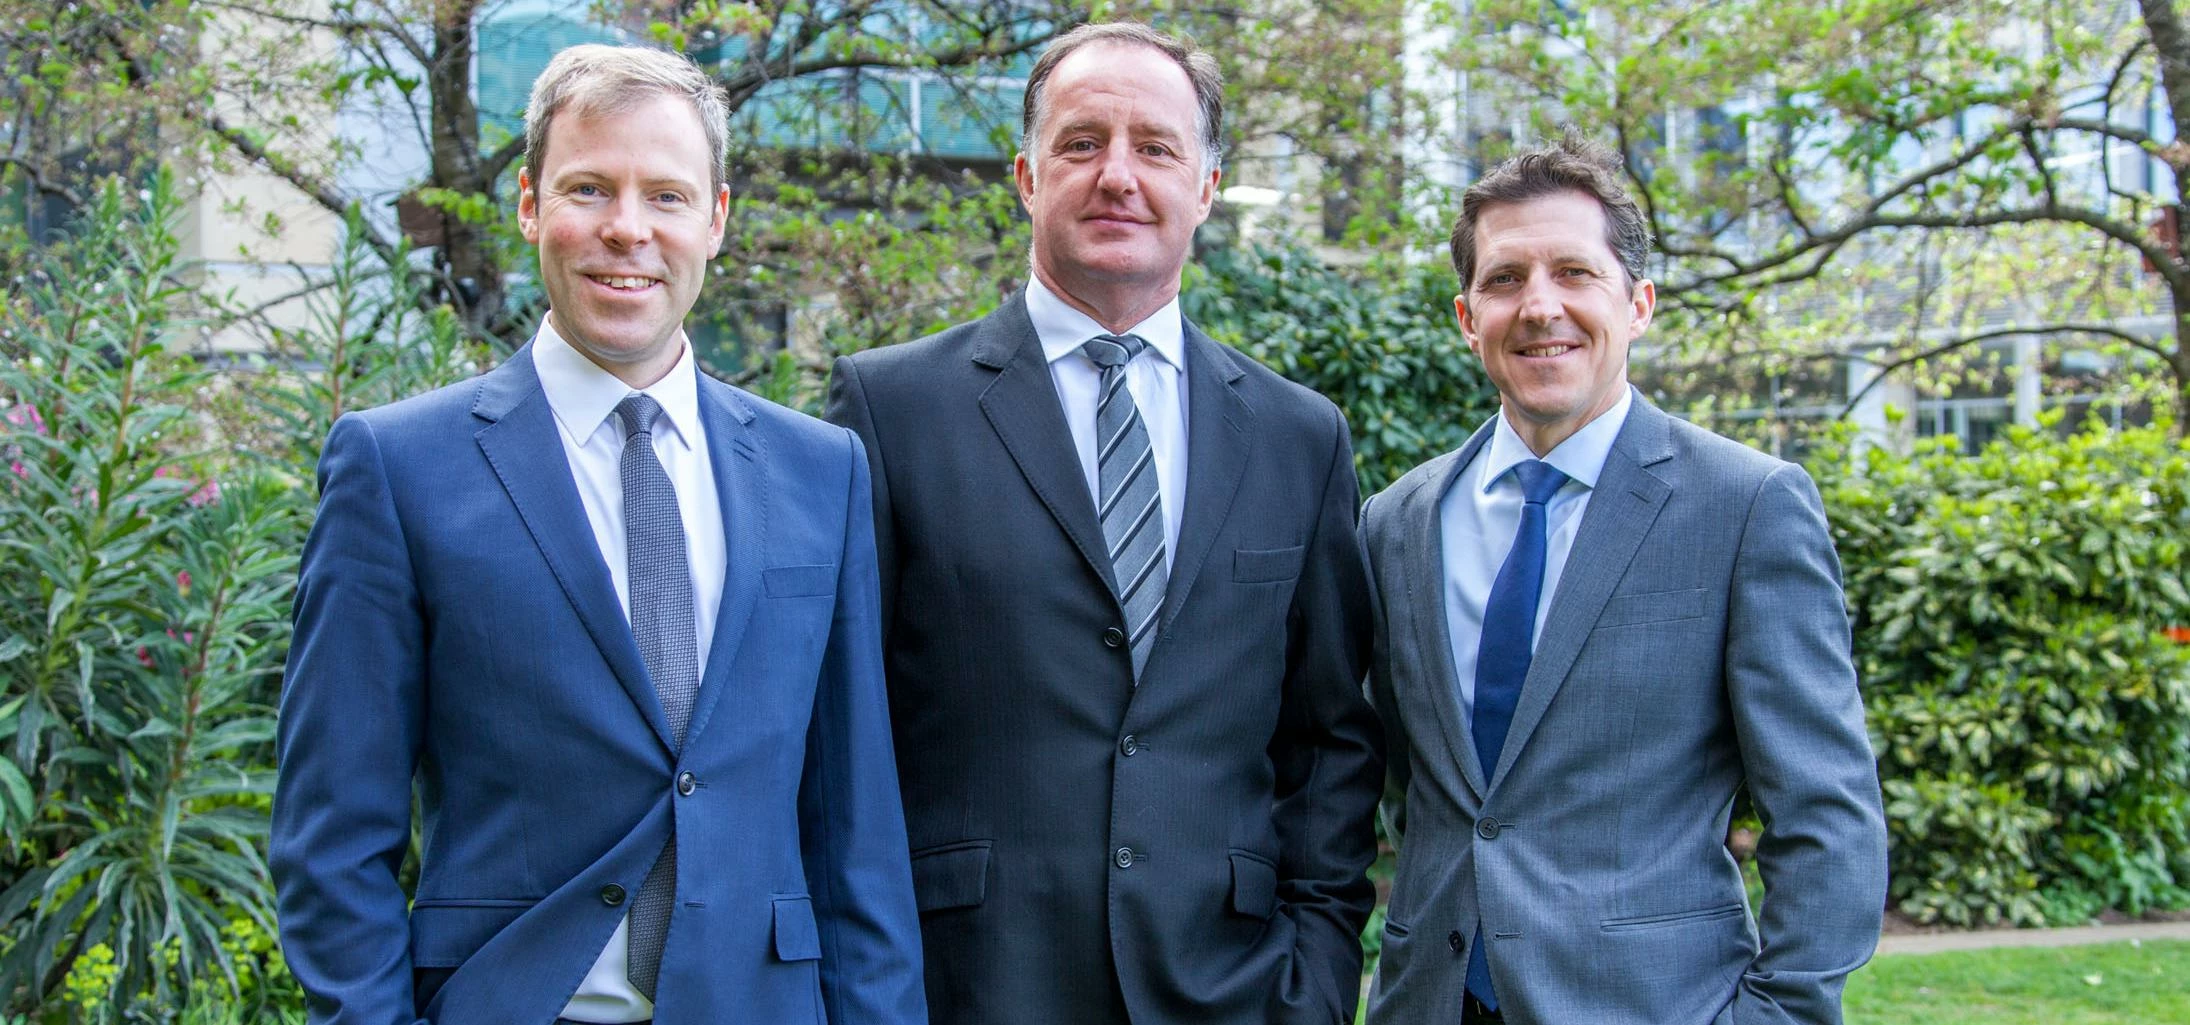 Taylor&Emmet's chief executive, Anthony Long (centre), congratulates James Drydale (left) and Neil R